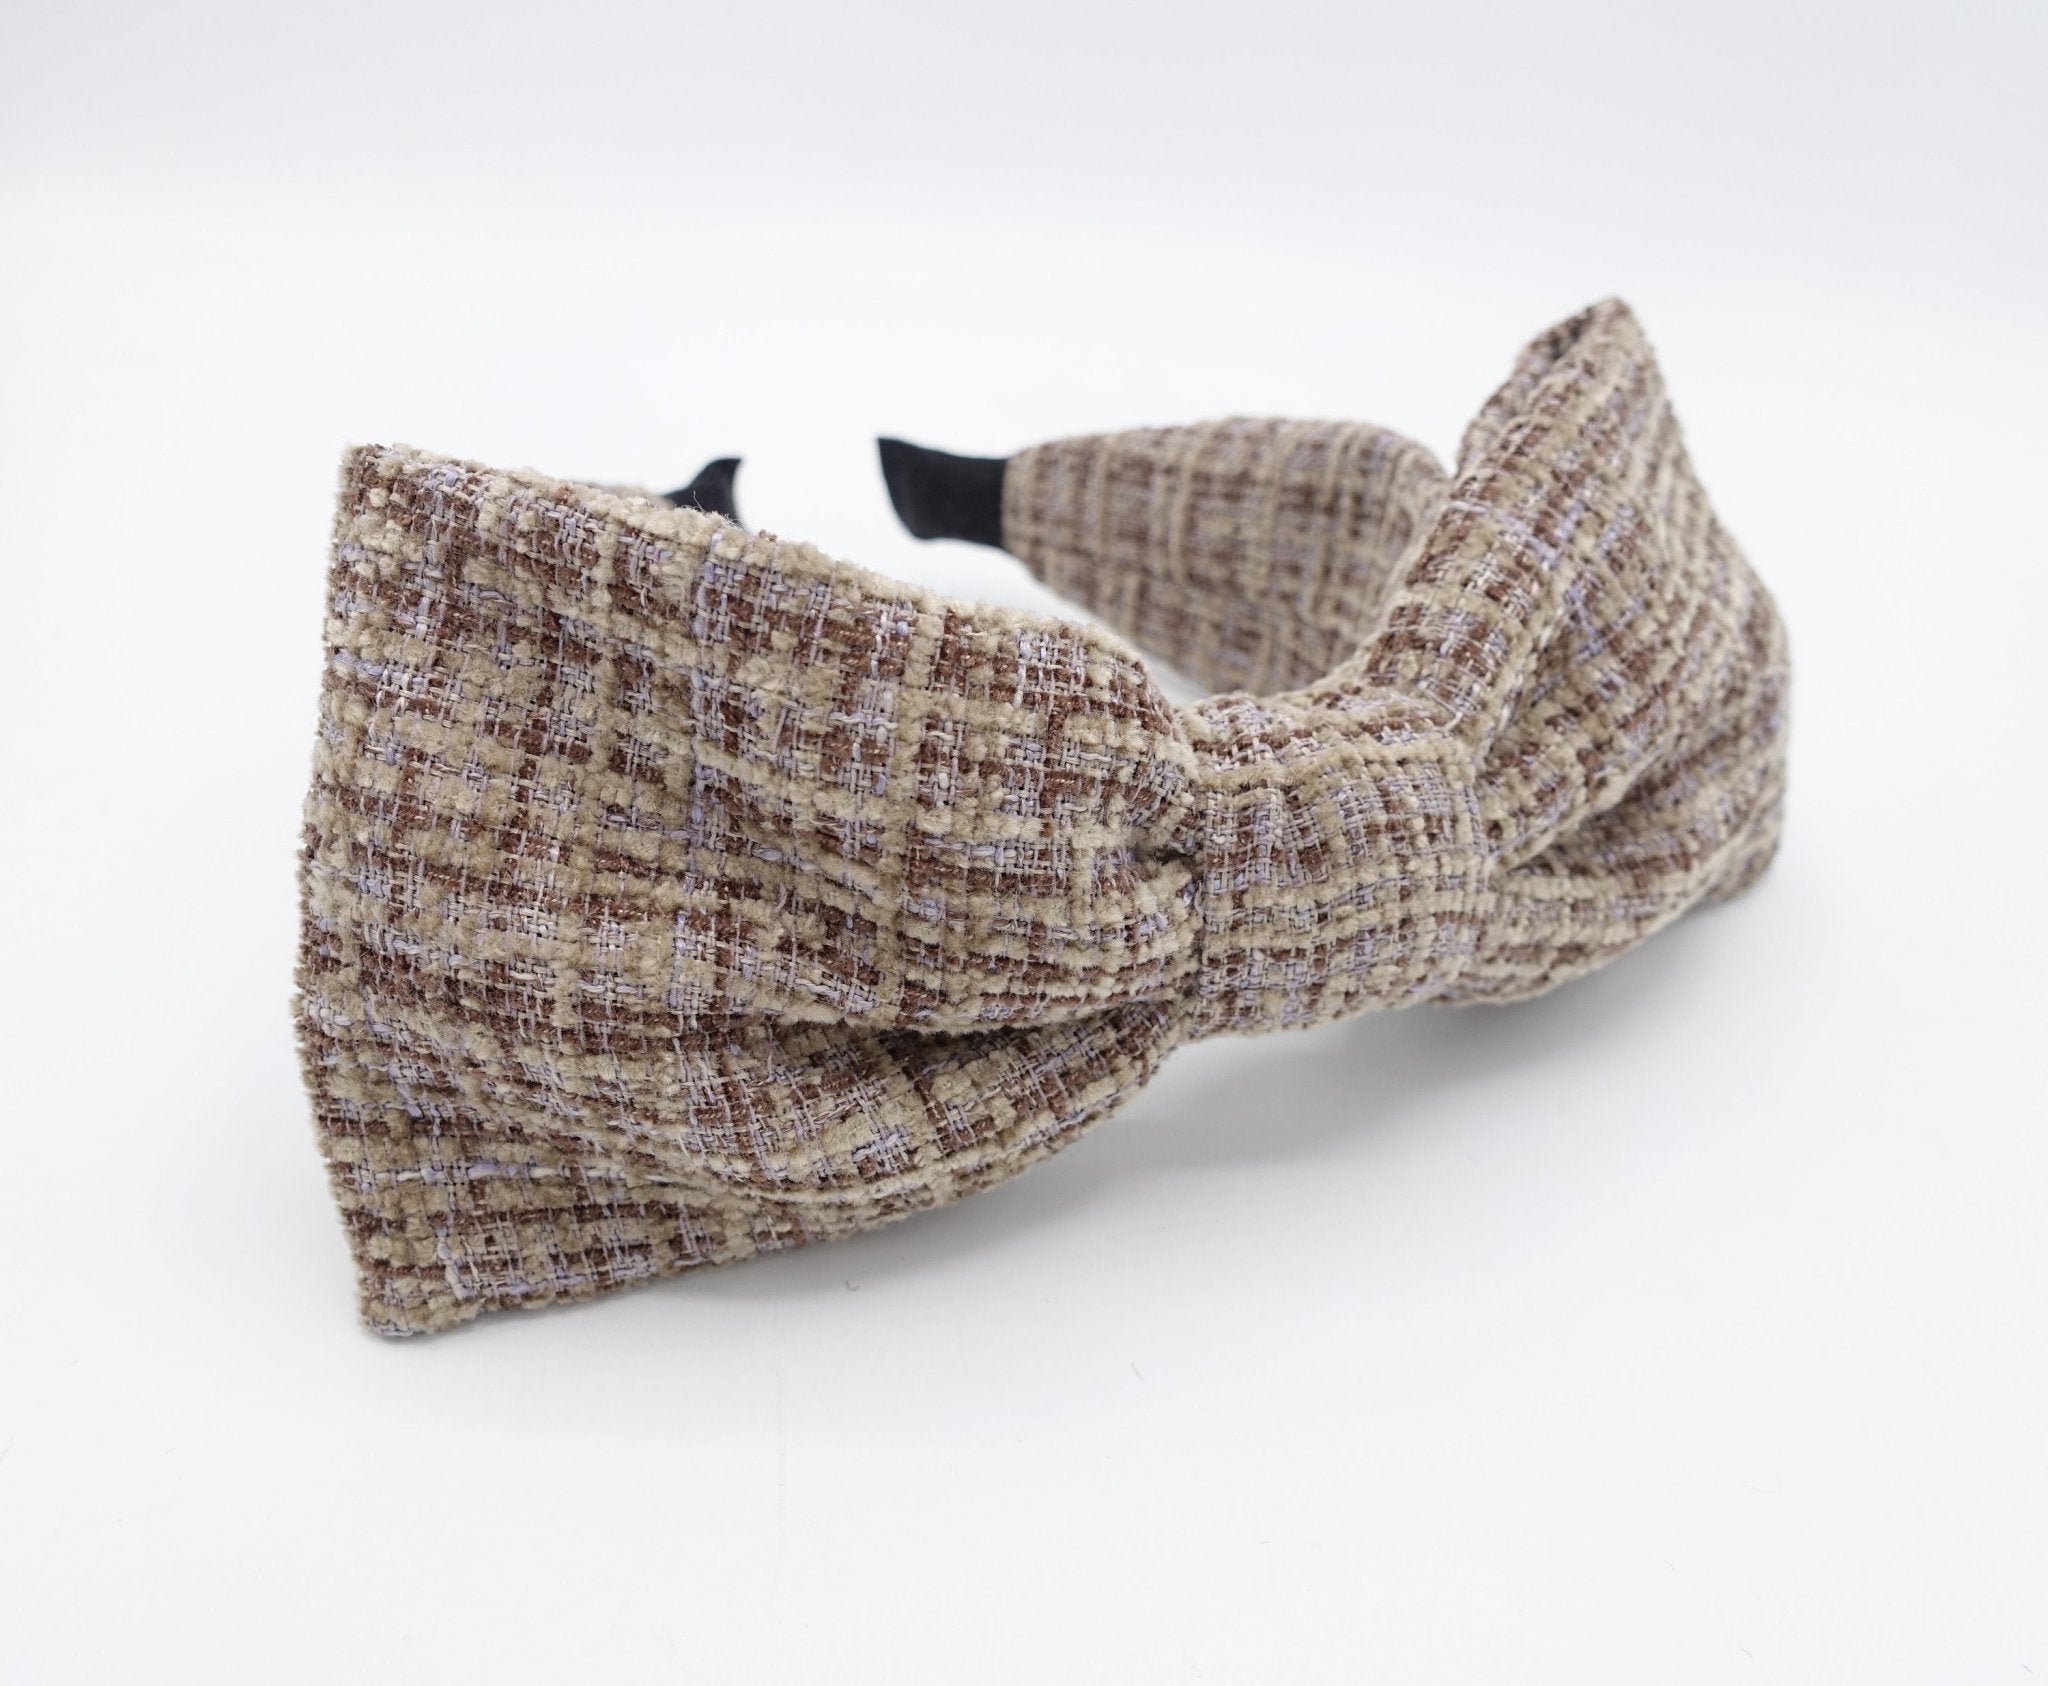 VeryShine tweed big bow headband  frayed pattern Fall Winter hairband women hair accessory